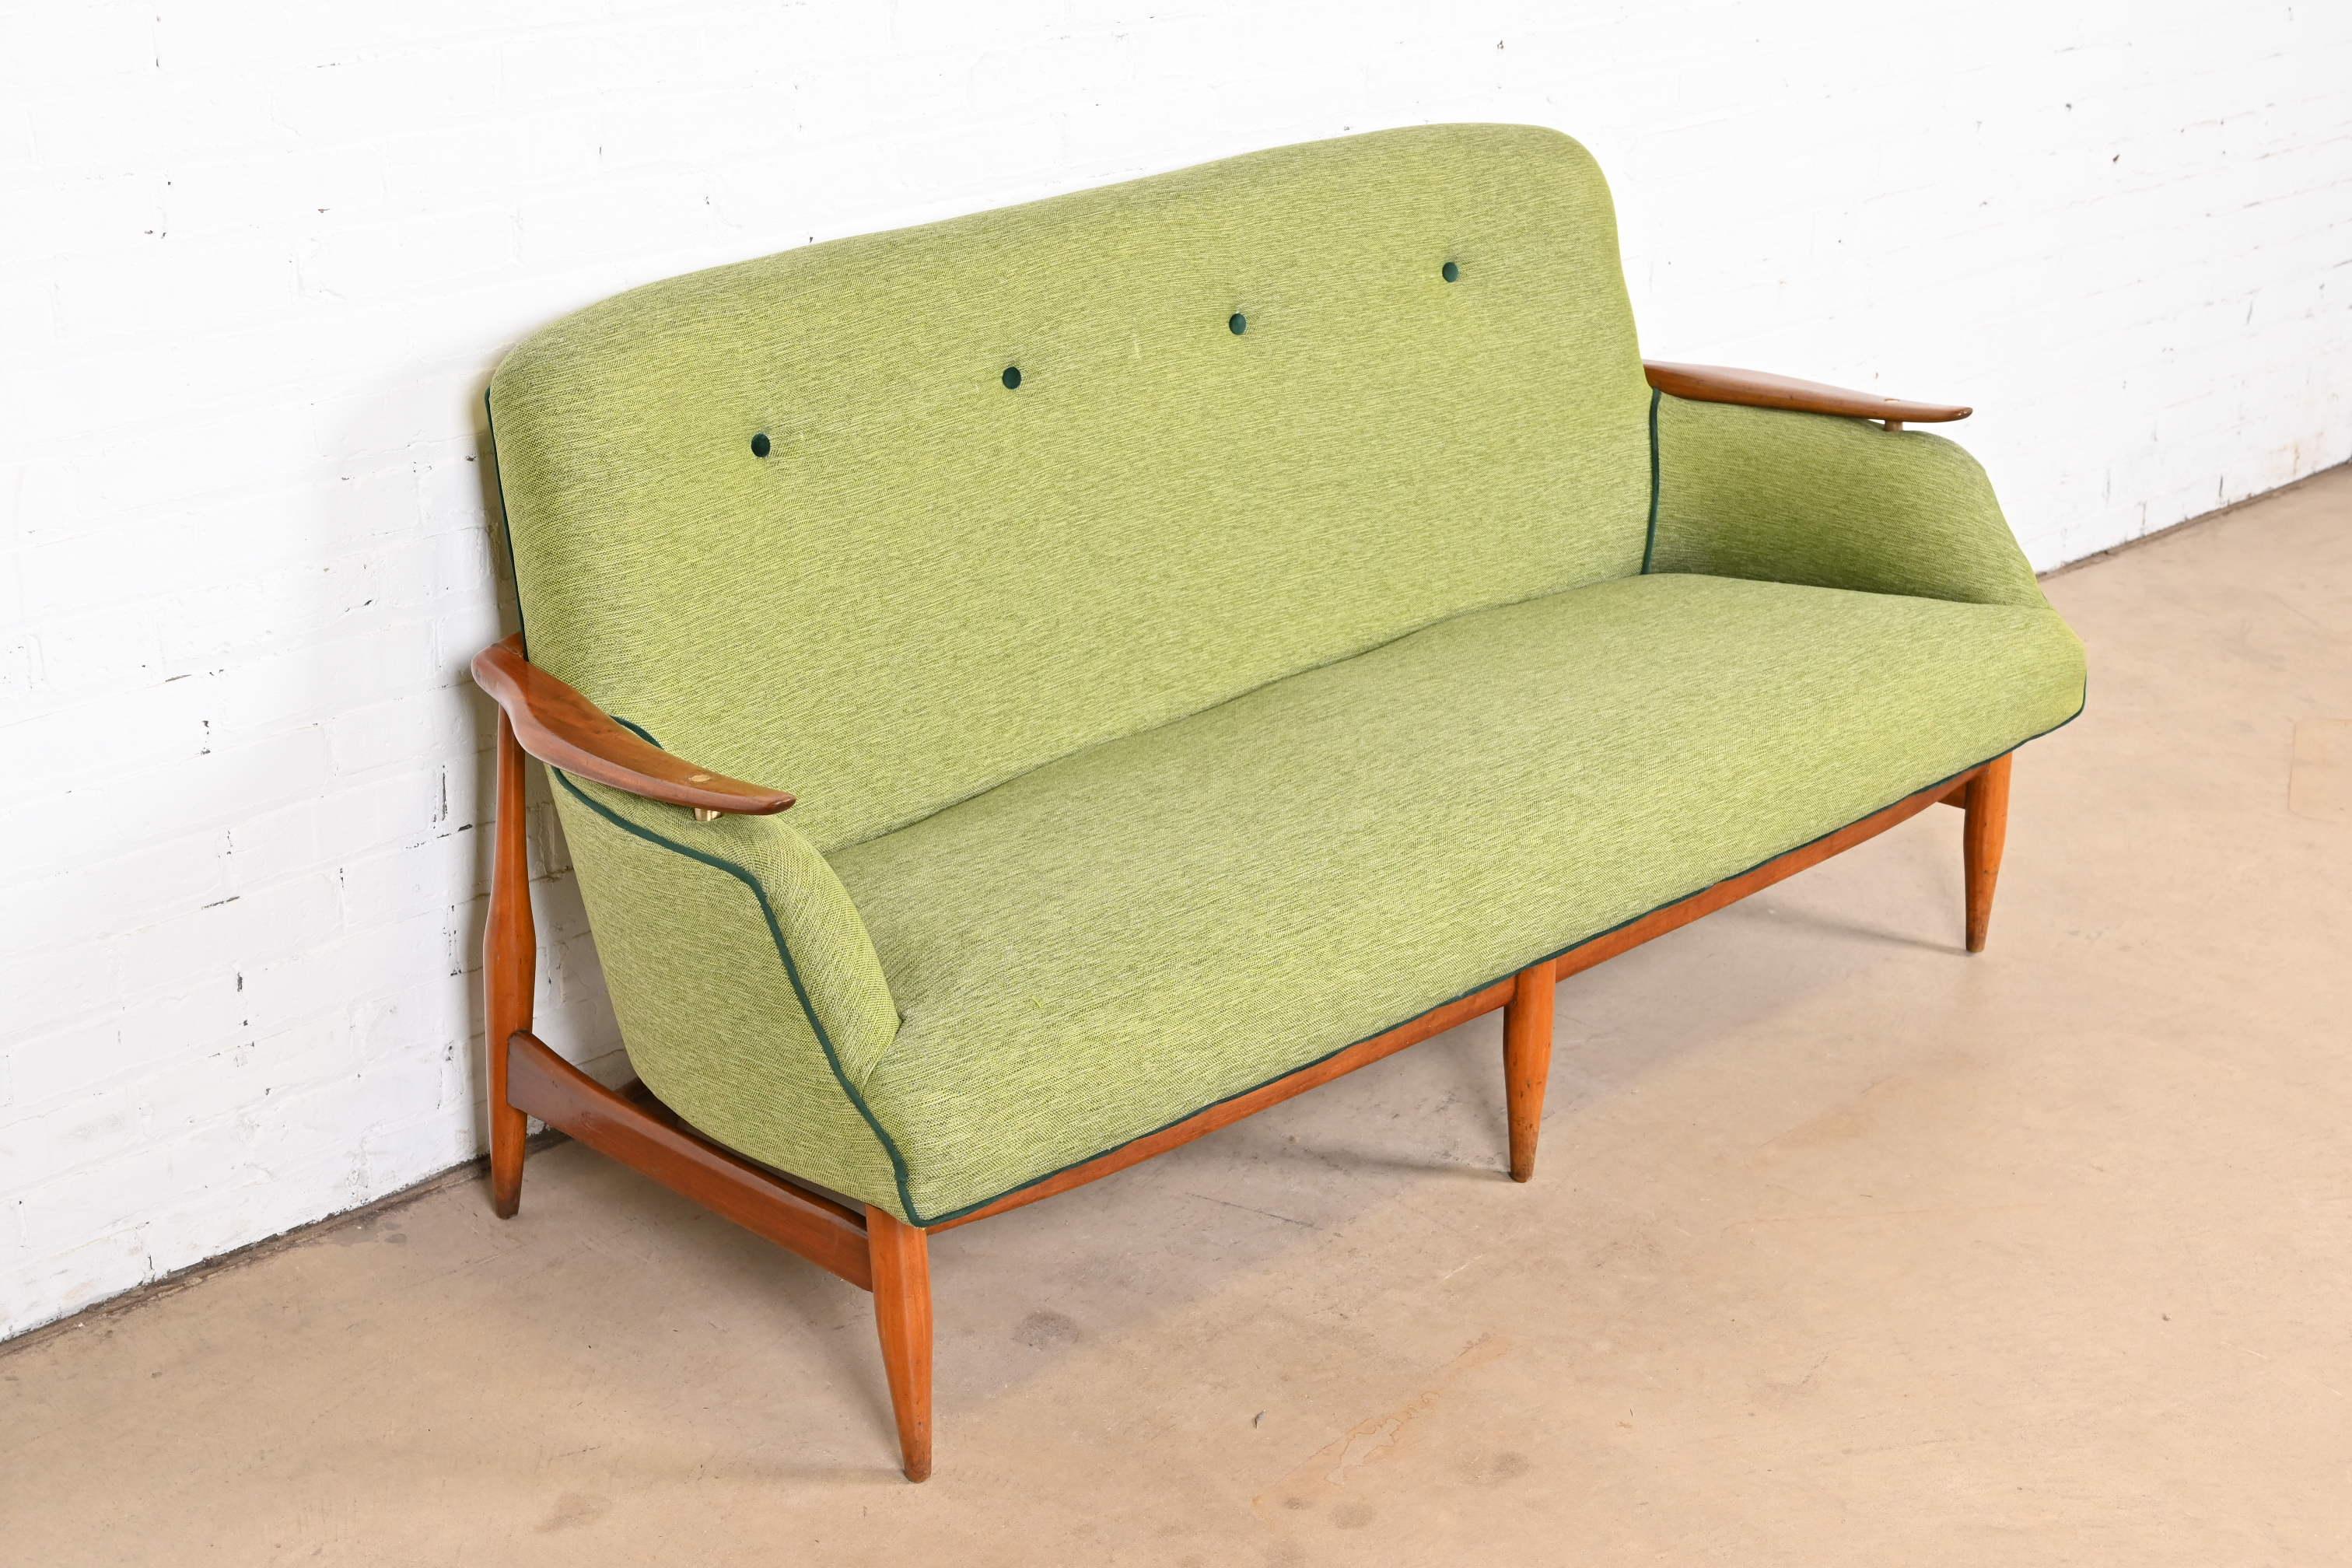 Finn Juhl Dänisches modernes gepolstertes, geformtes Teakholz-Sofa, 1950er Jahre (Polster) im Angebot